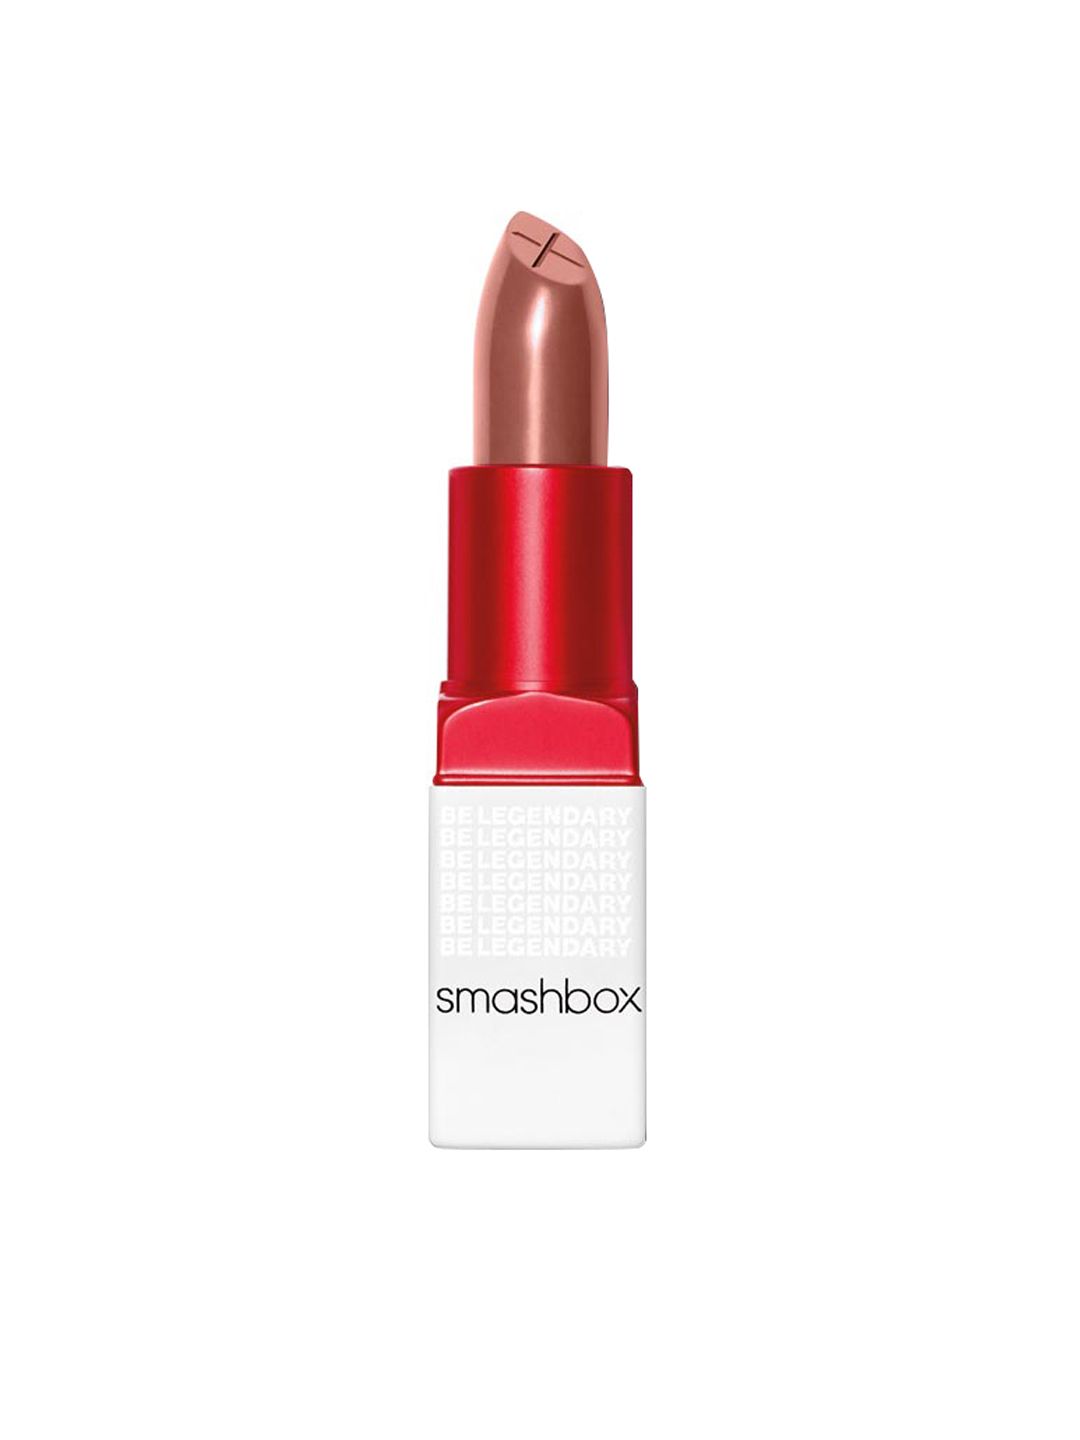 Smashbox Be Legendary Prime & Plush Lipstick - Higher Self Price in India